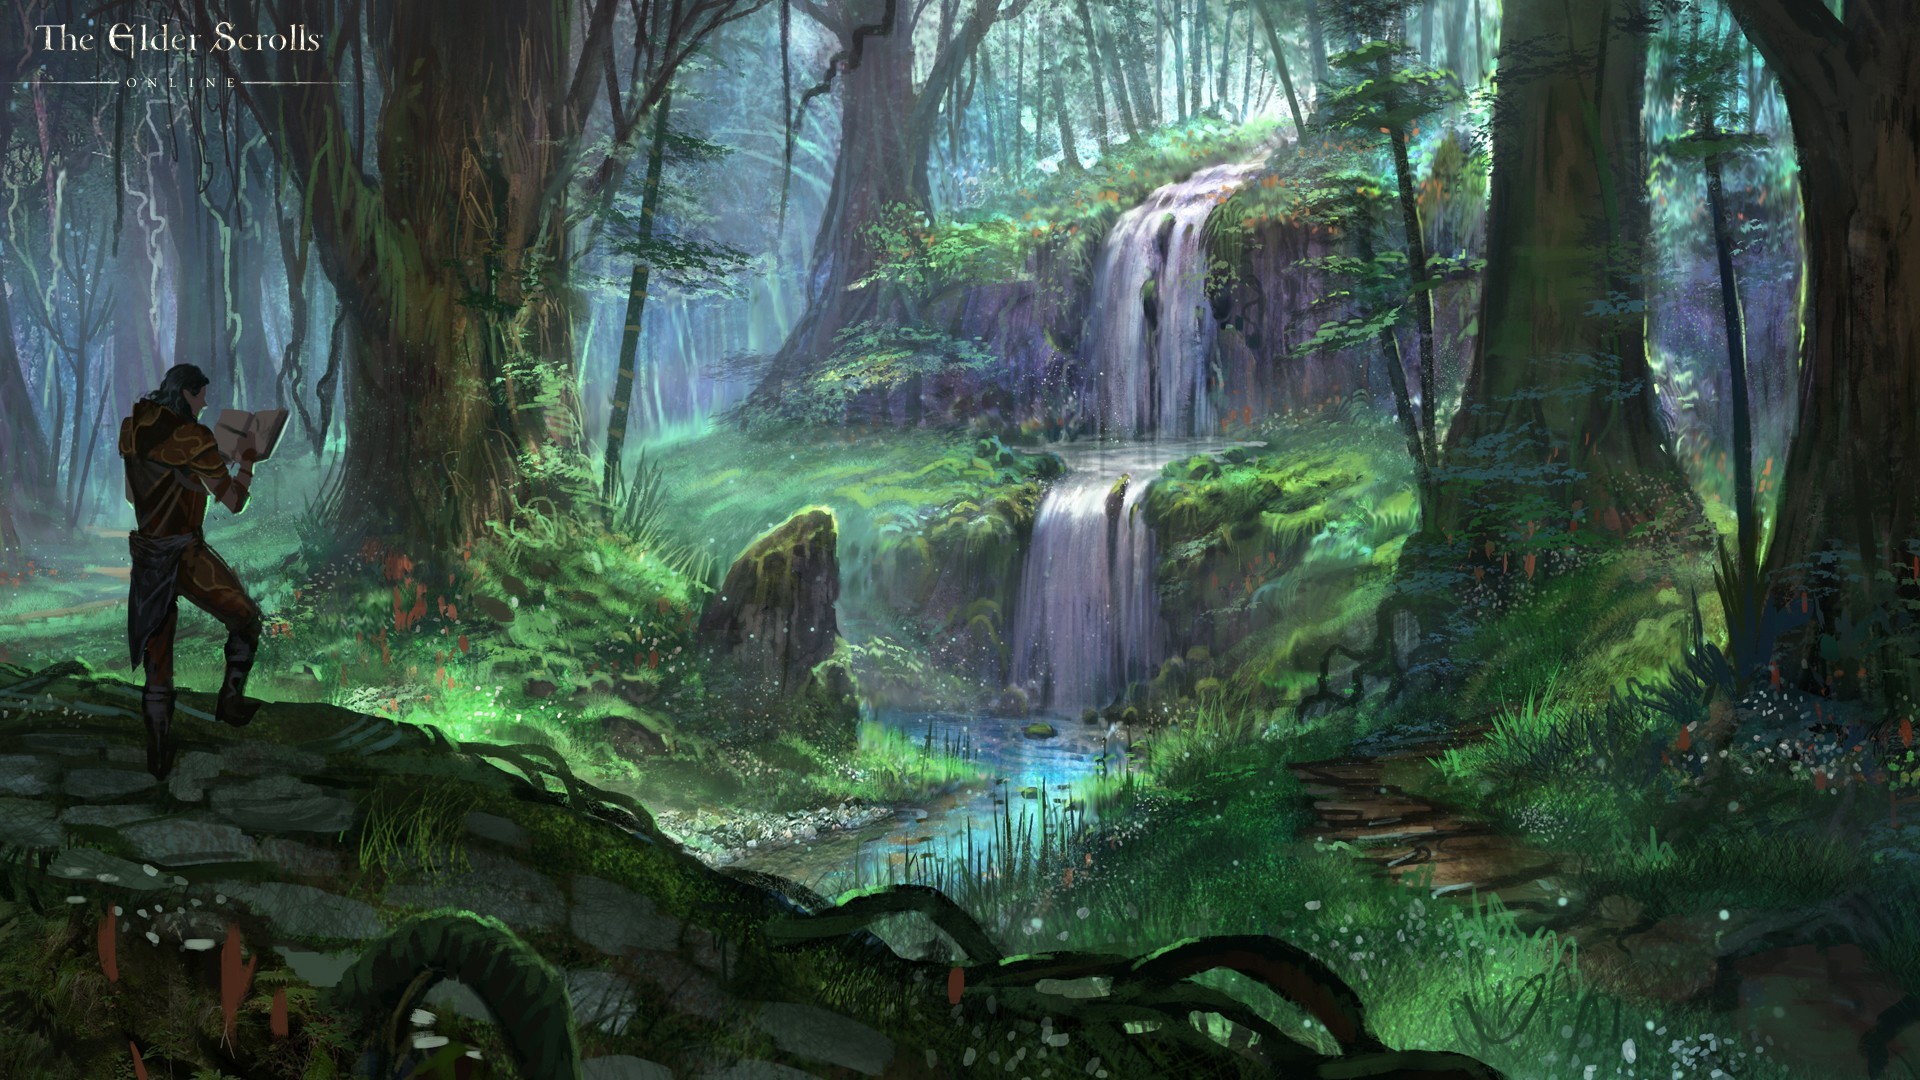 General 1920x1080 The Elder Scrolls Online artwork waterfall forest video games fantasy art PC gaming